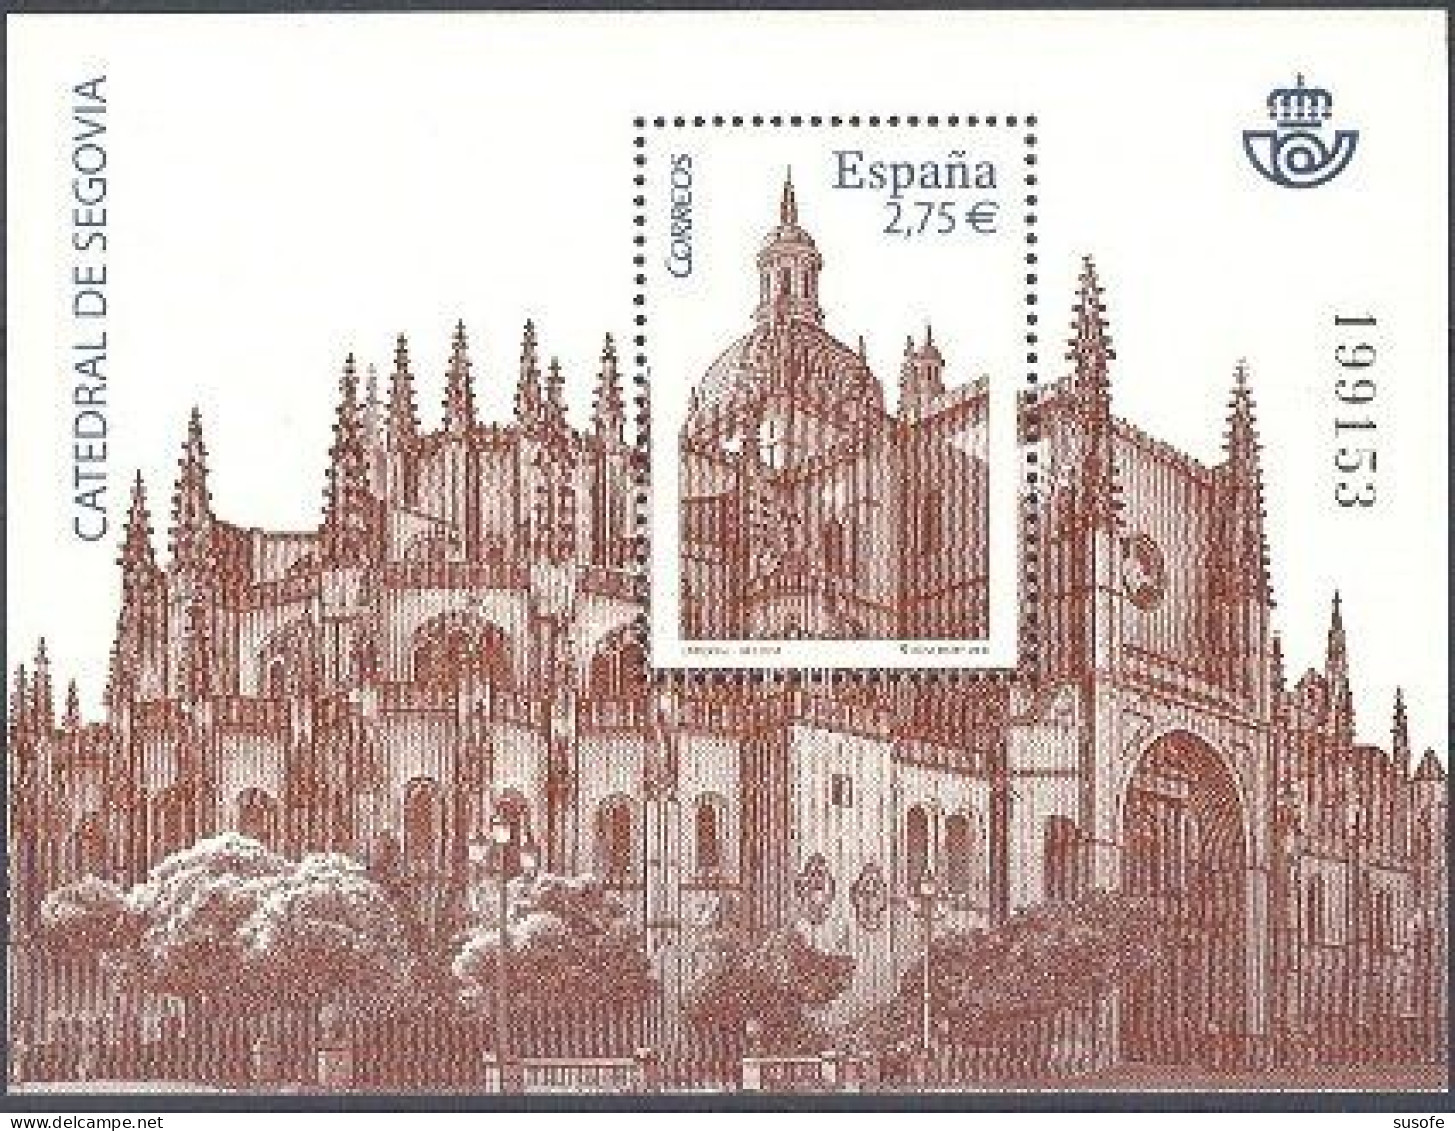 España 2010 Edifil 4580 Sello ** HB Catedral De Segovia Michel BL196 Yvert BF188 Spain Stamp Timbre Espagne Briefmarke - Ongebruikt